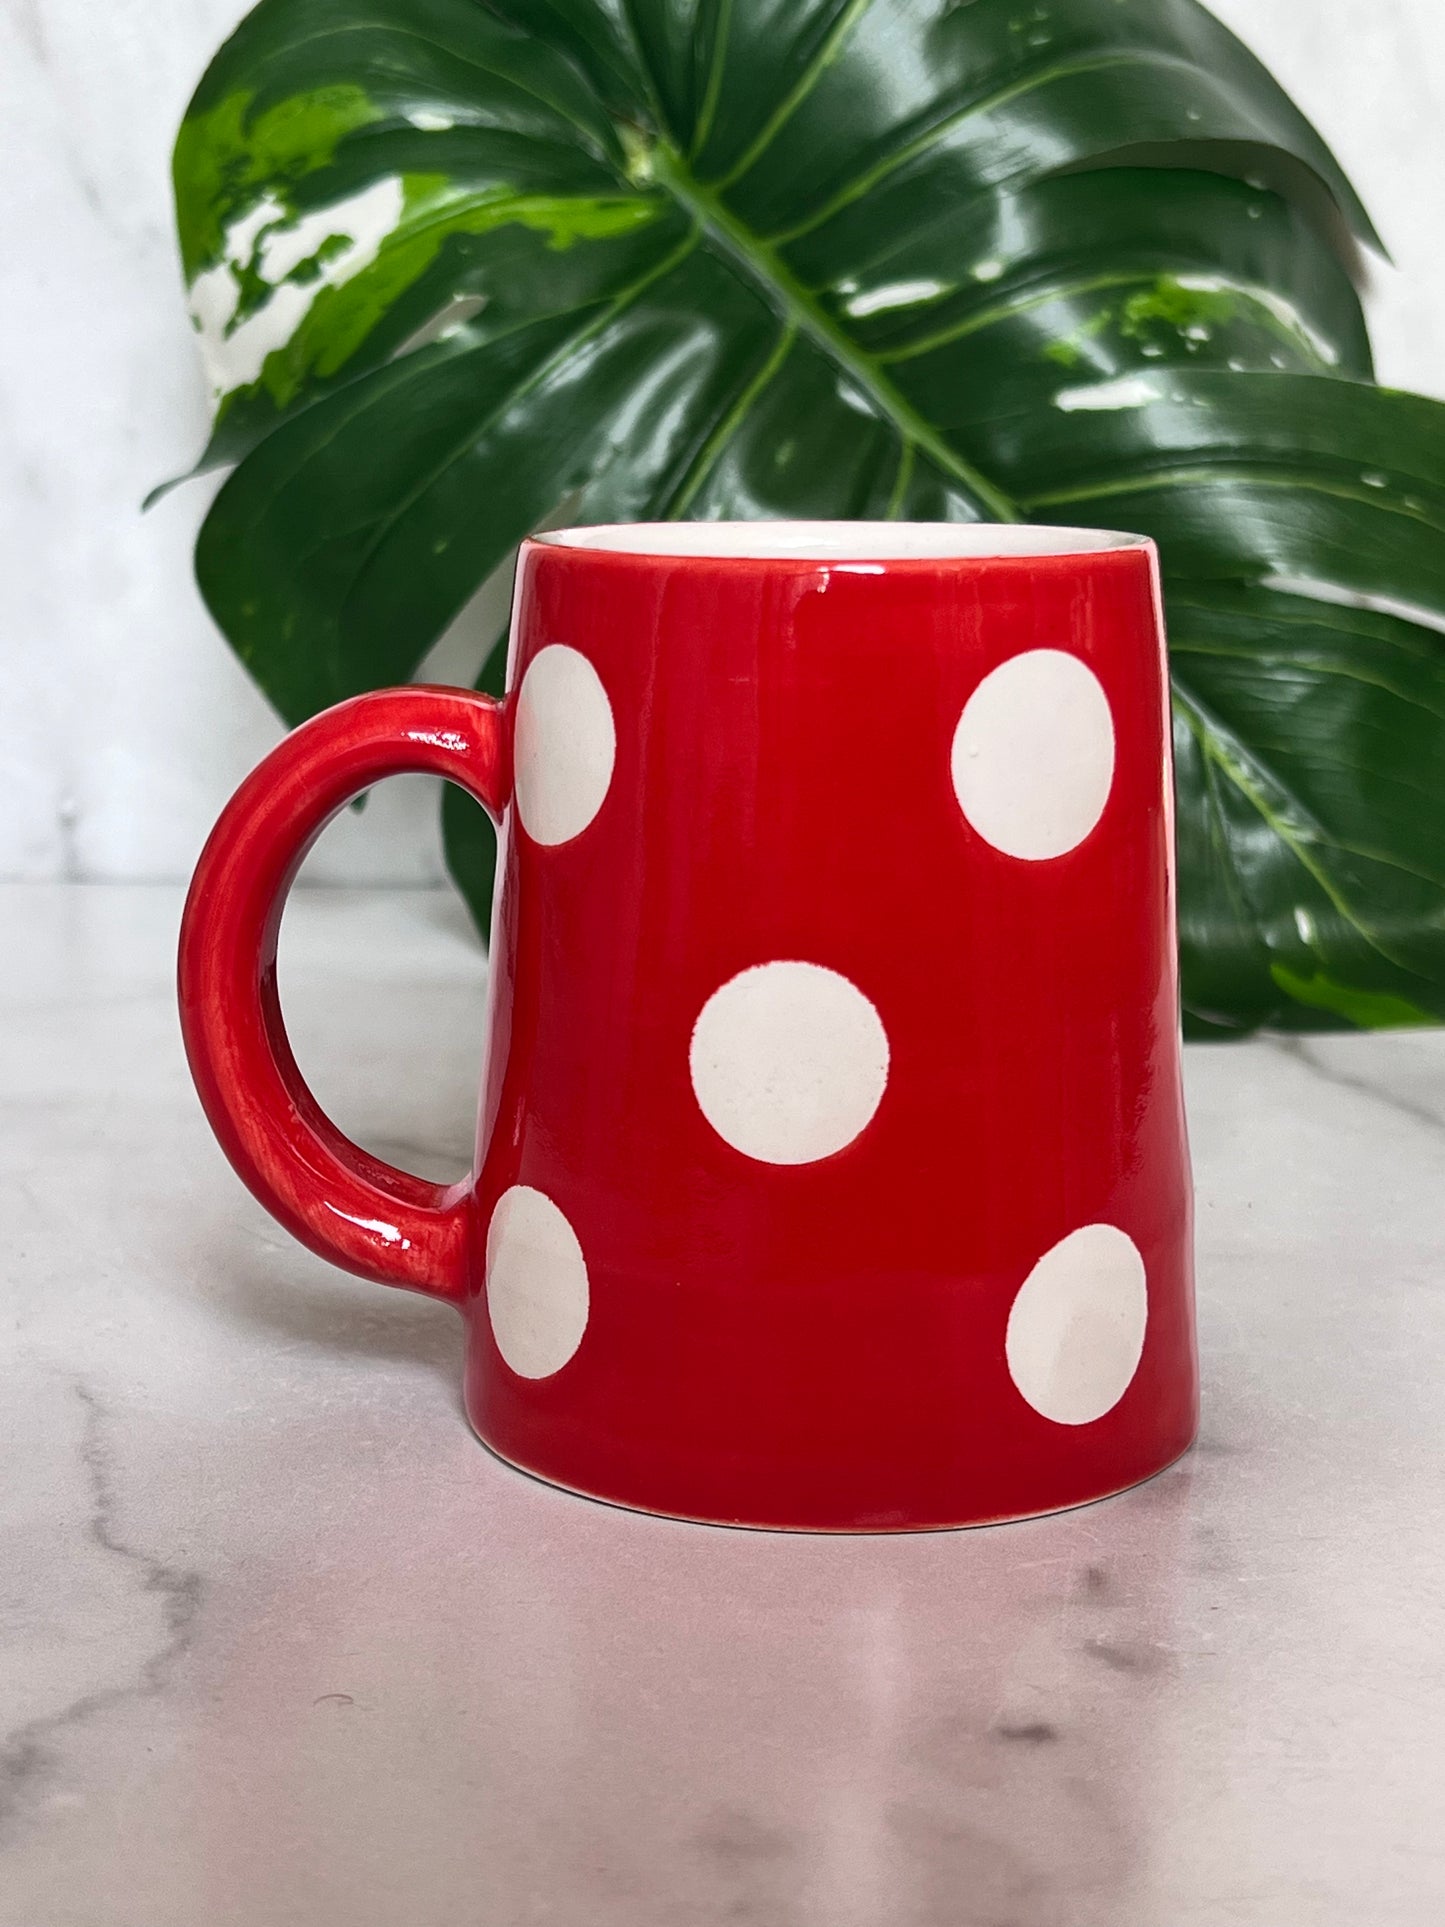 Red and white polka dot mug